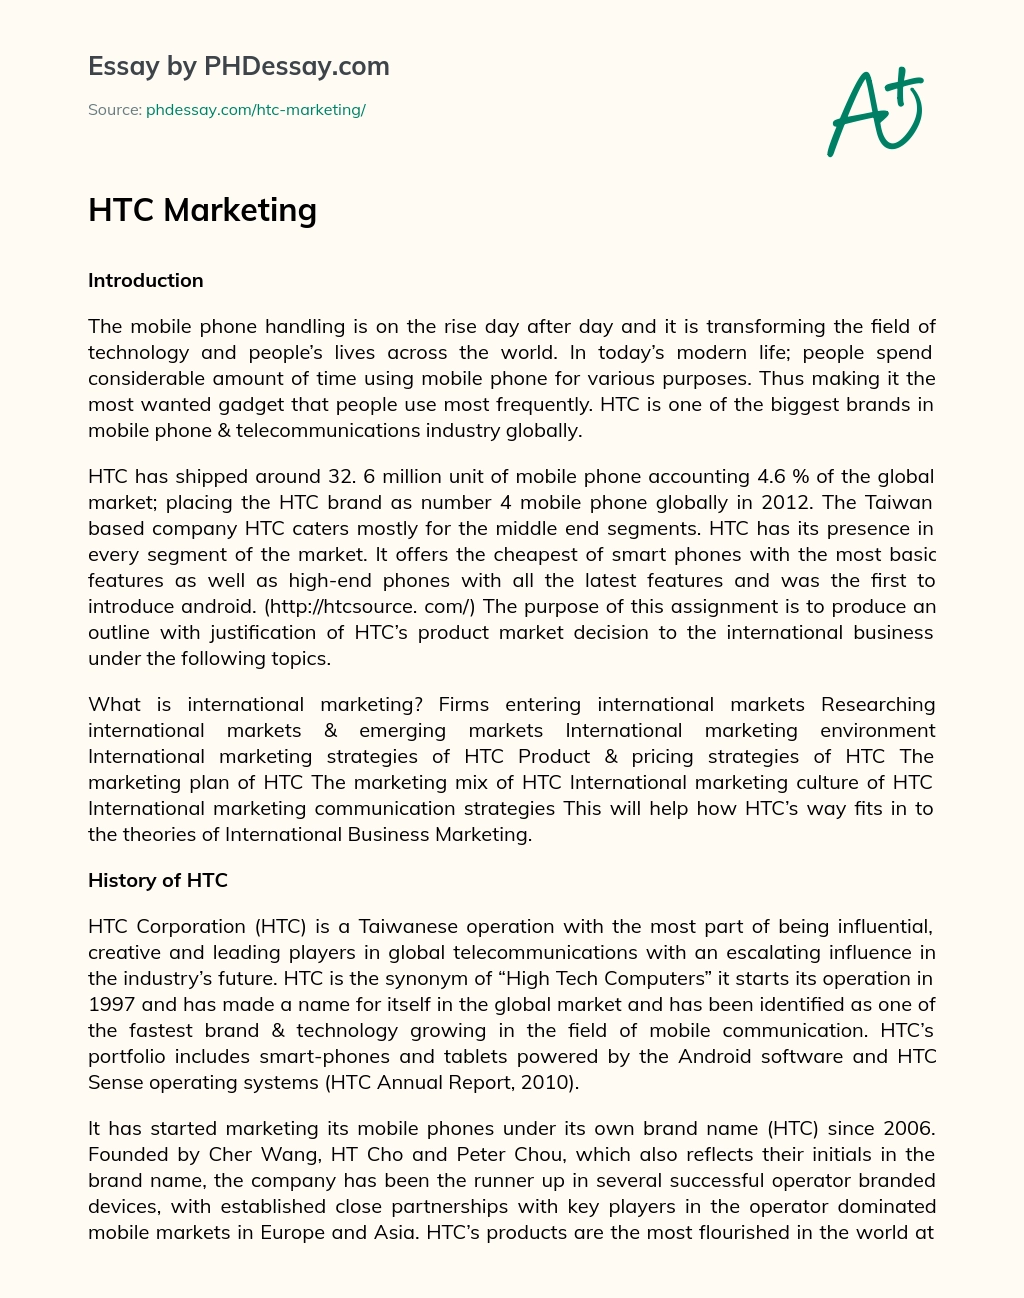 HTC Marketing essay